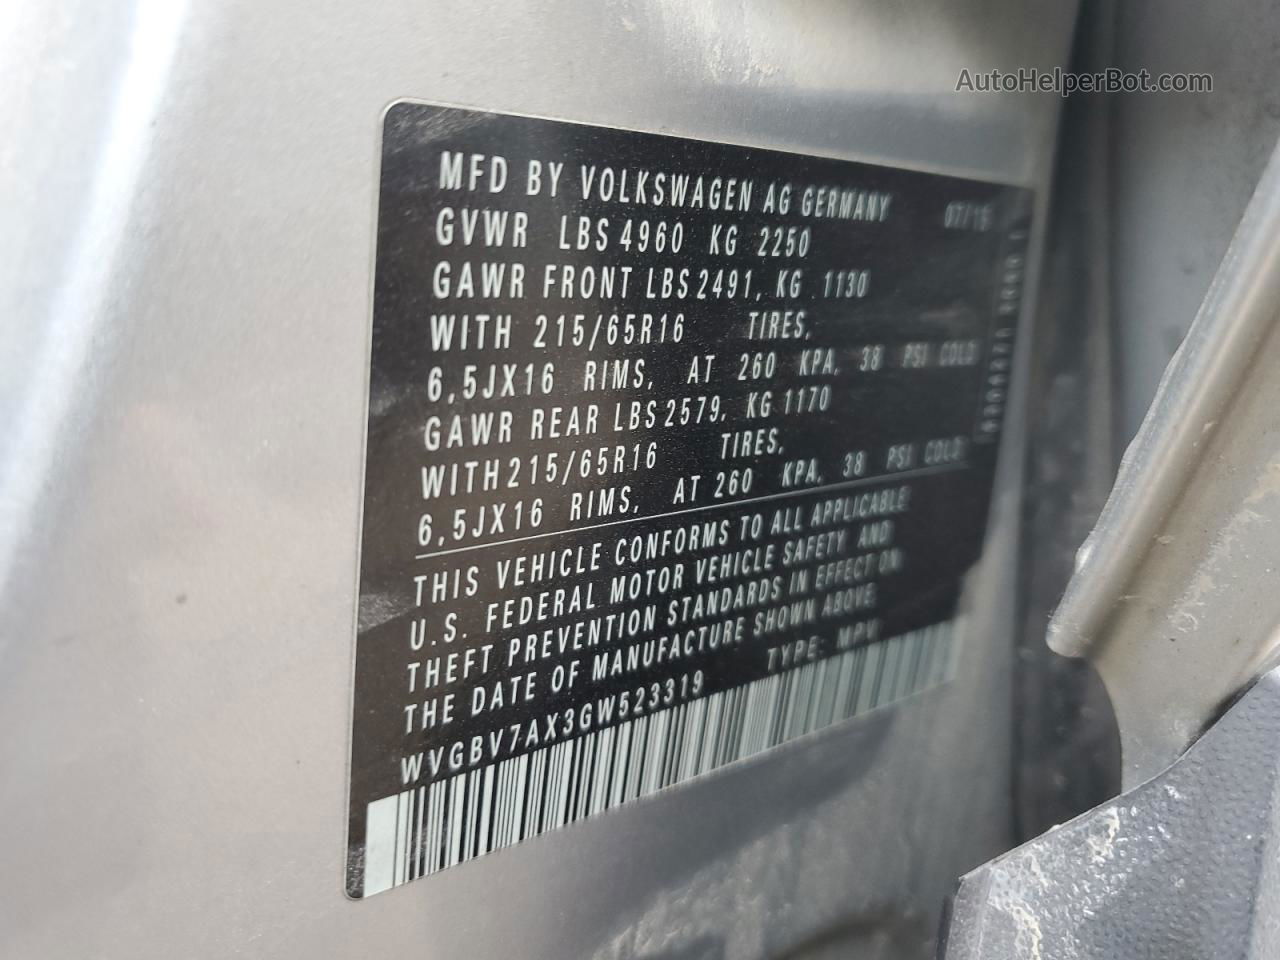 2016 Volkswagen Tiguan S Gray vin: WVGBV7AX3GW523319